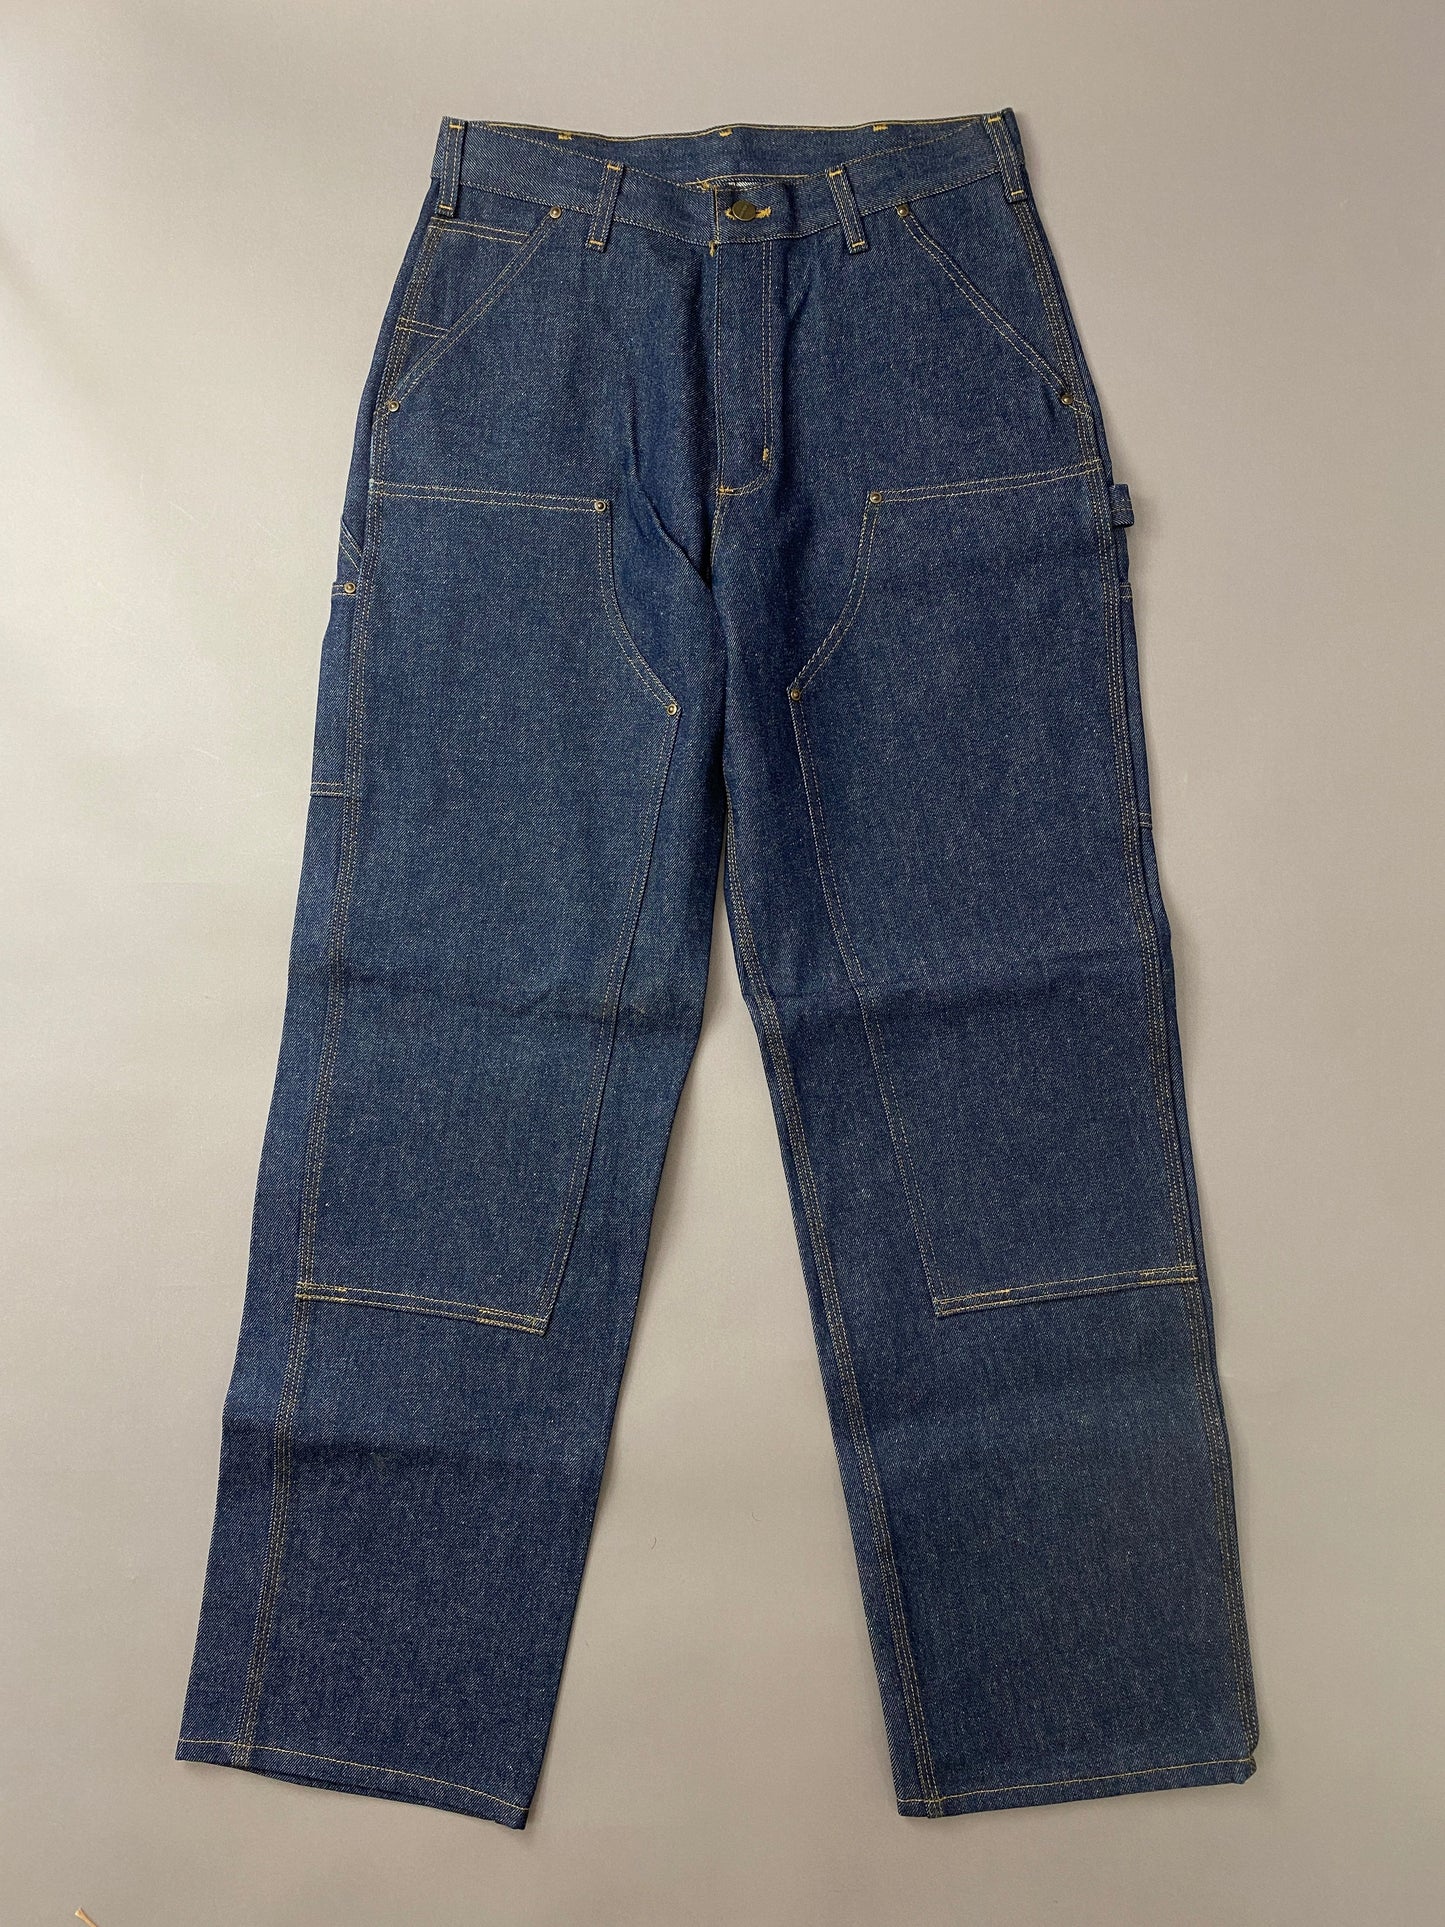 Double Knee Carhartt Jeans - 34 x 32